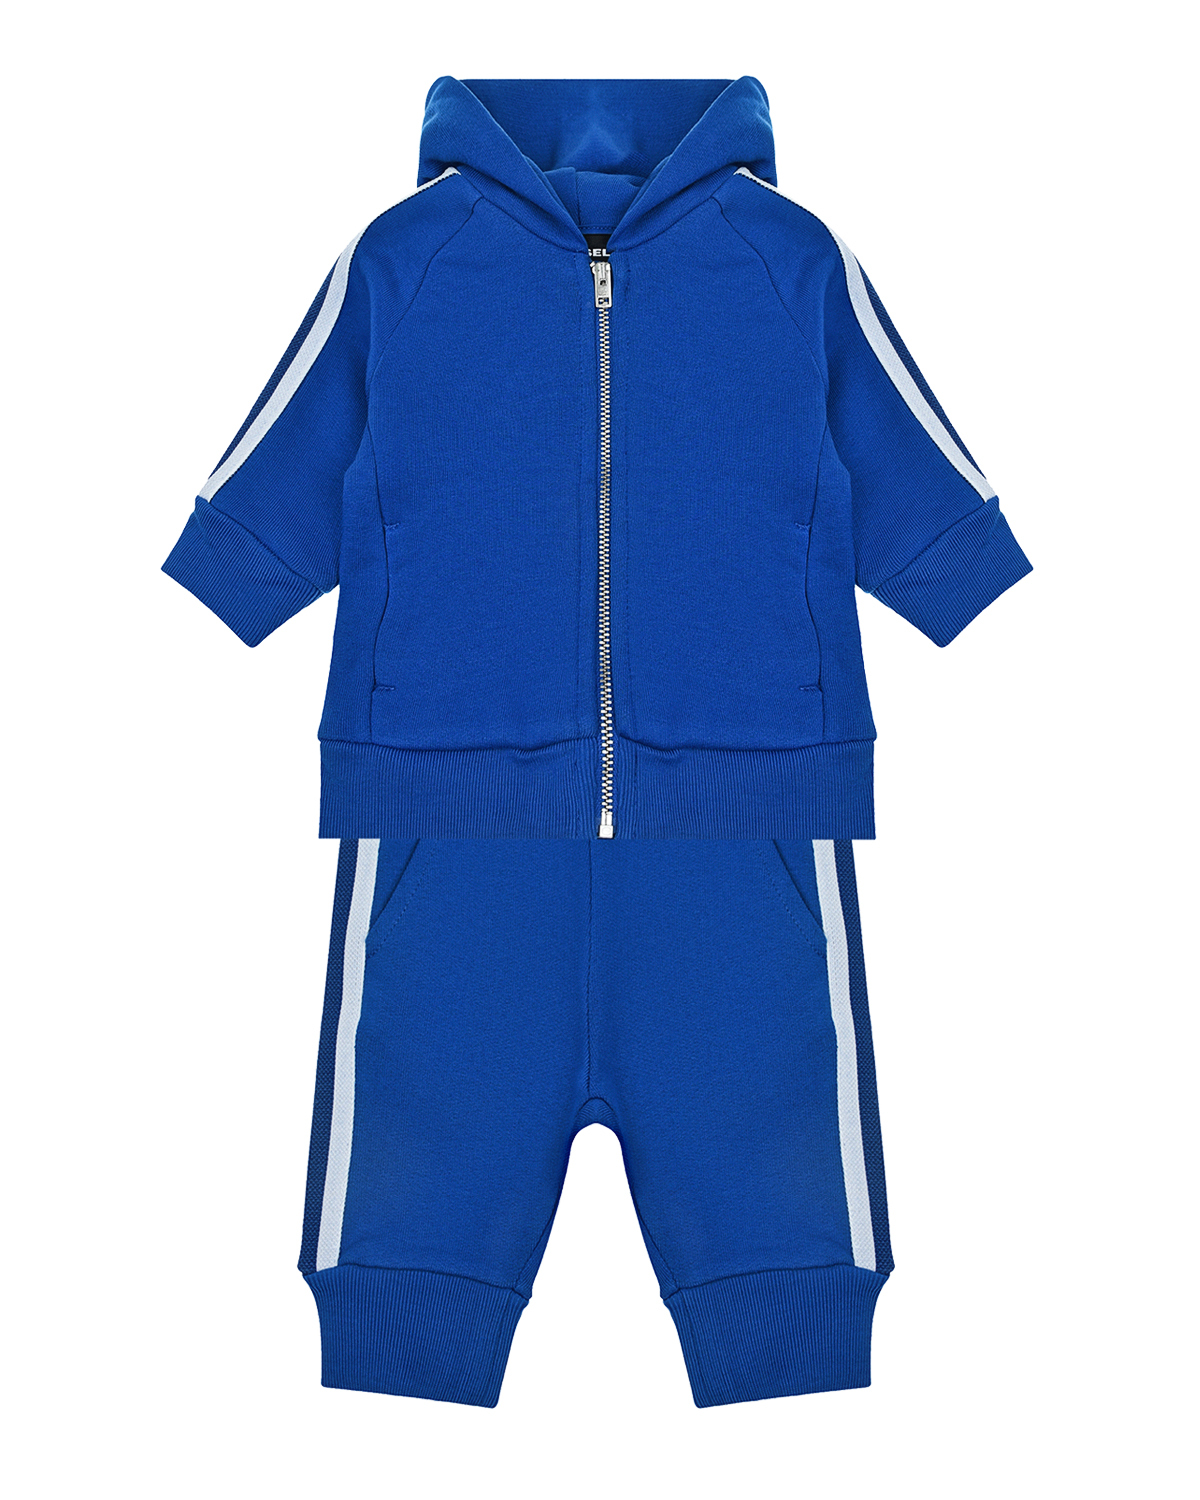 Синий спортивный костюм с лампасами Diesel детский, размер 62 - фото 1